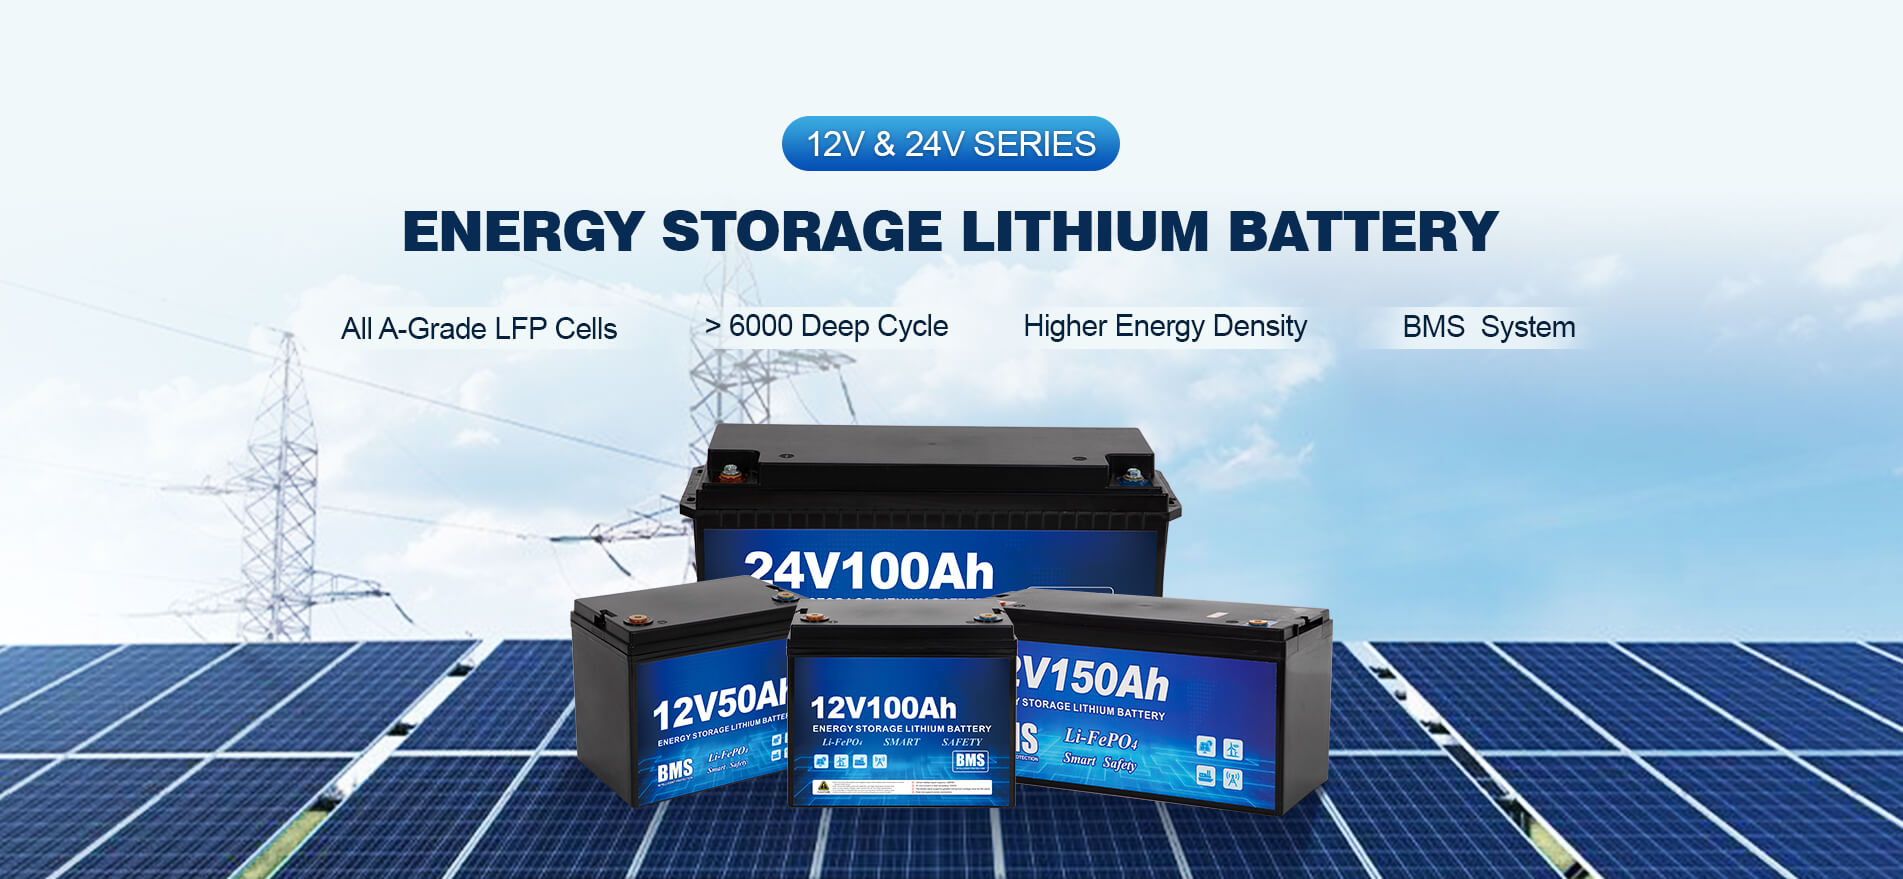 Lithium Iron Phosphate Battery